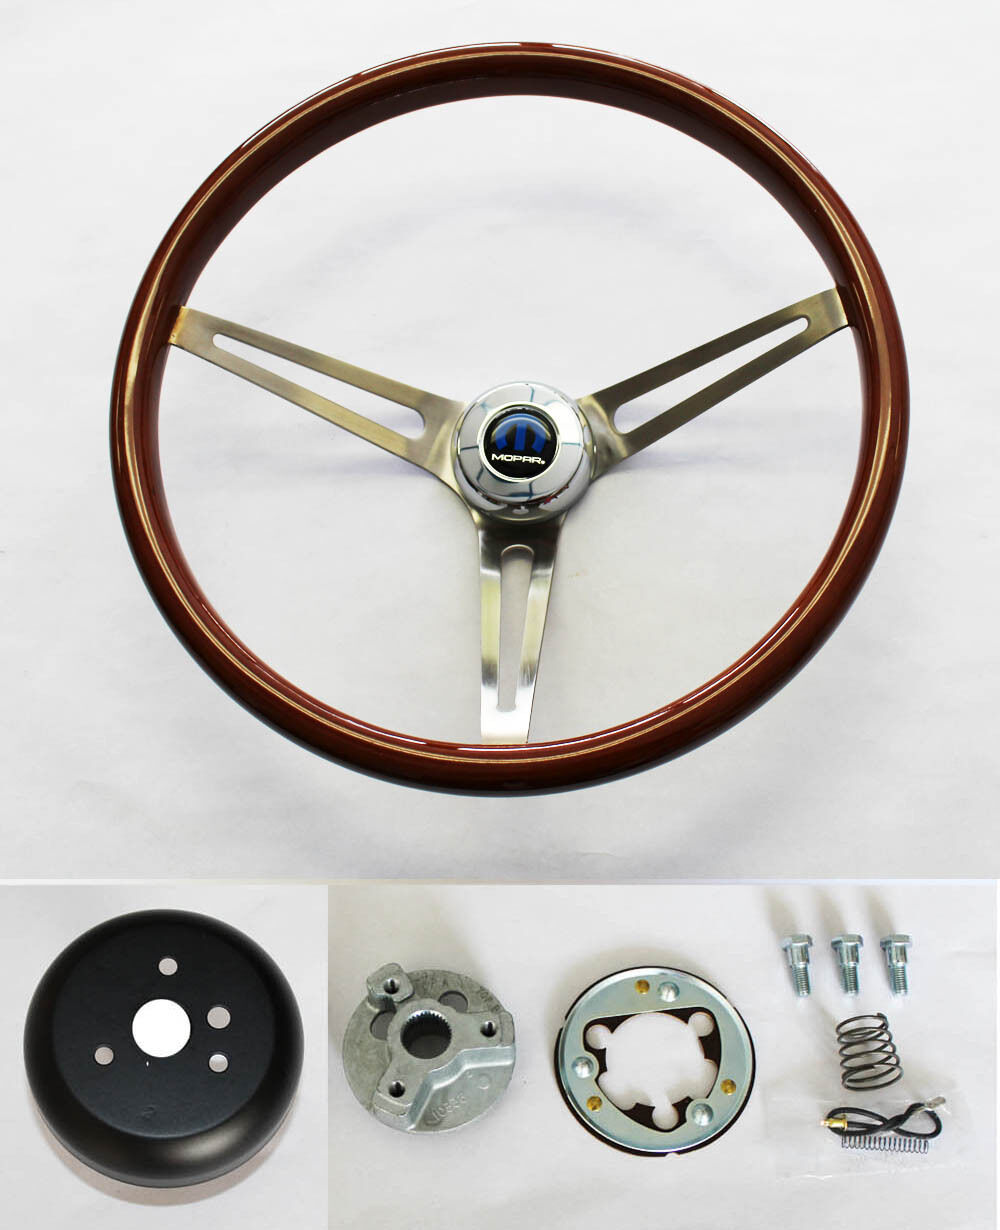 1967 Charger Dart Coronet High Gloss Finish Wood Steering Wheel stainless spokes